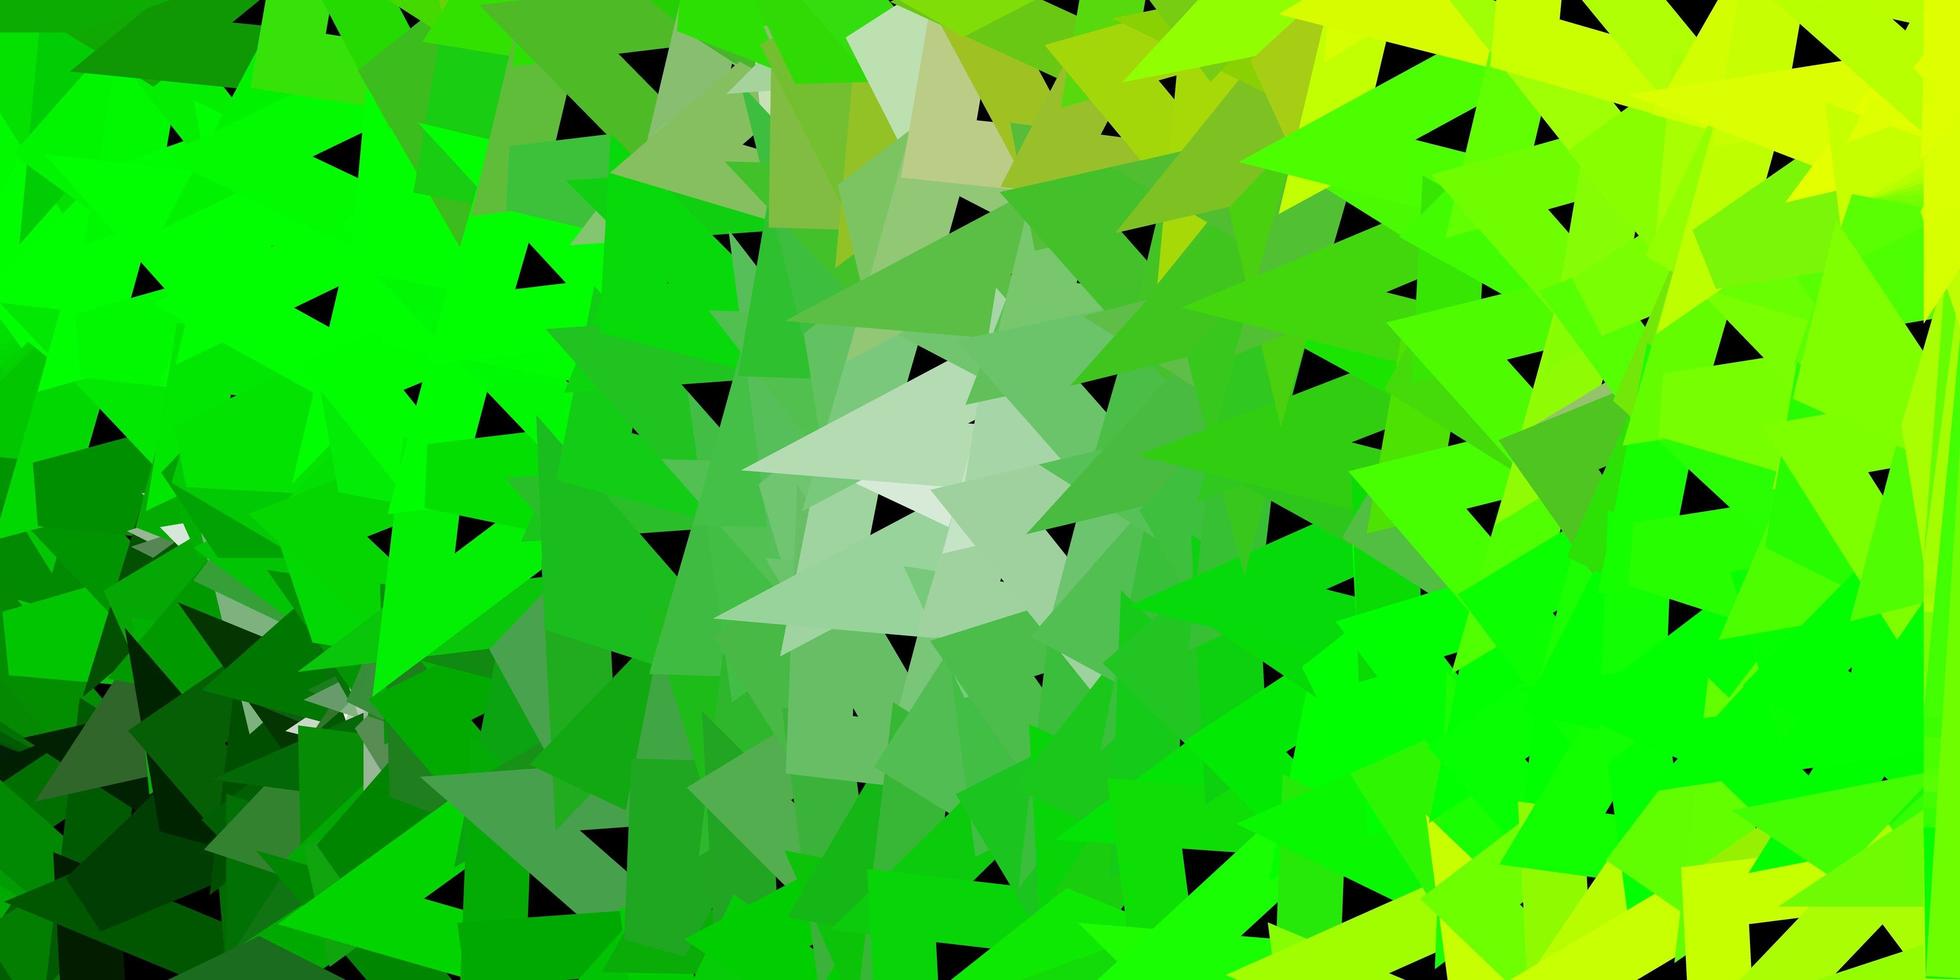 sfondo poligonale vettoriale giallo verde chiaro